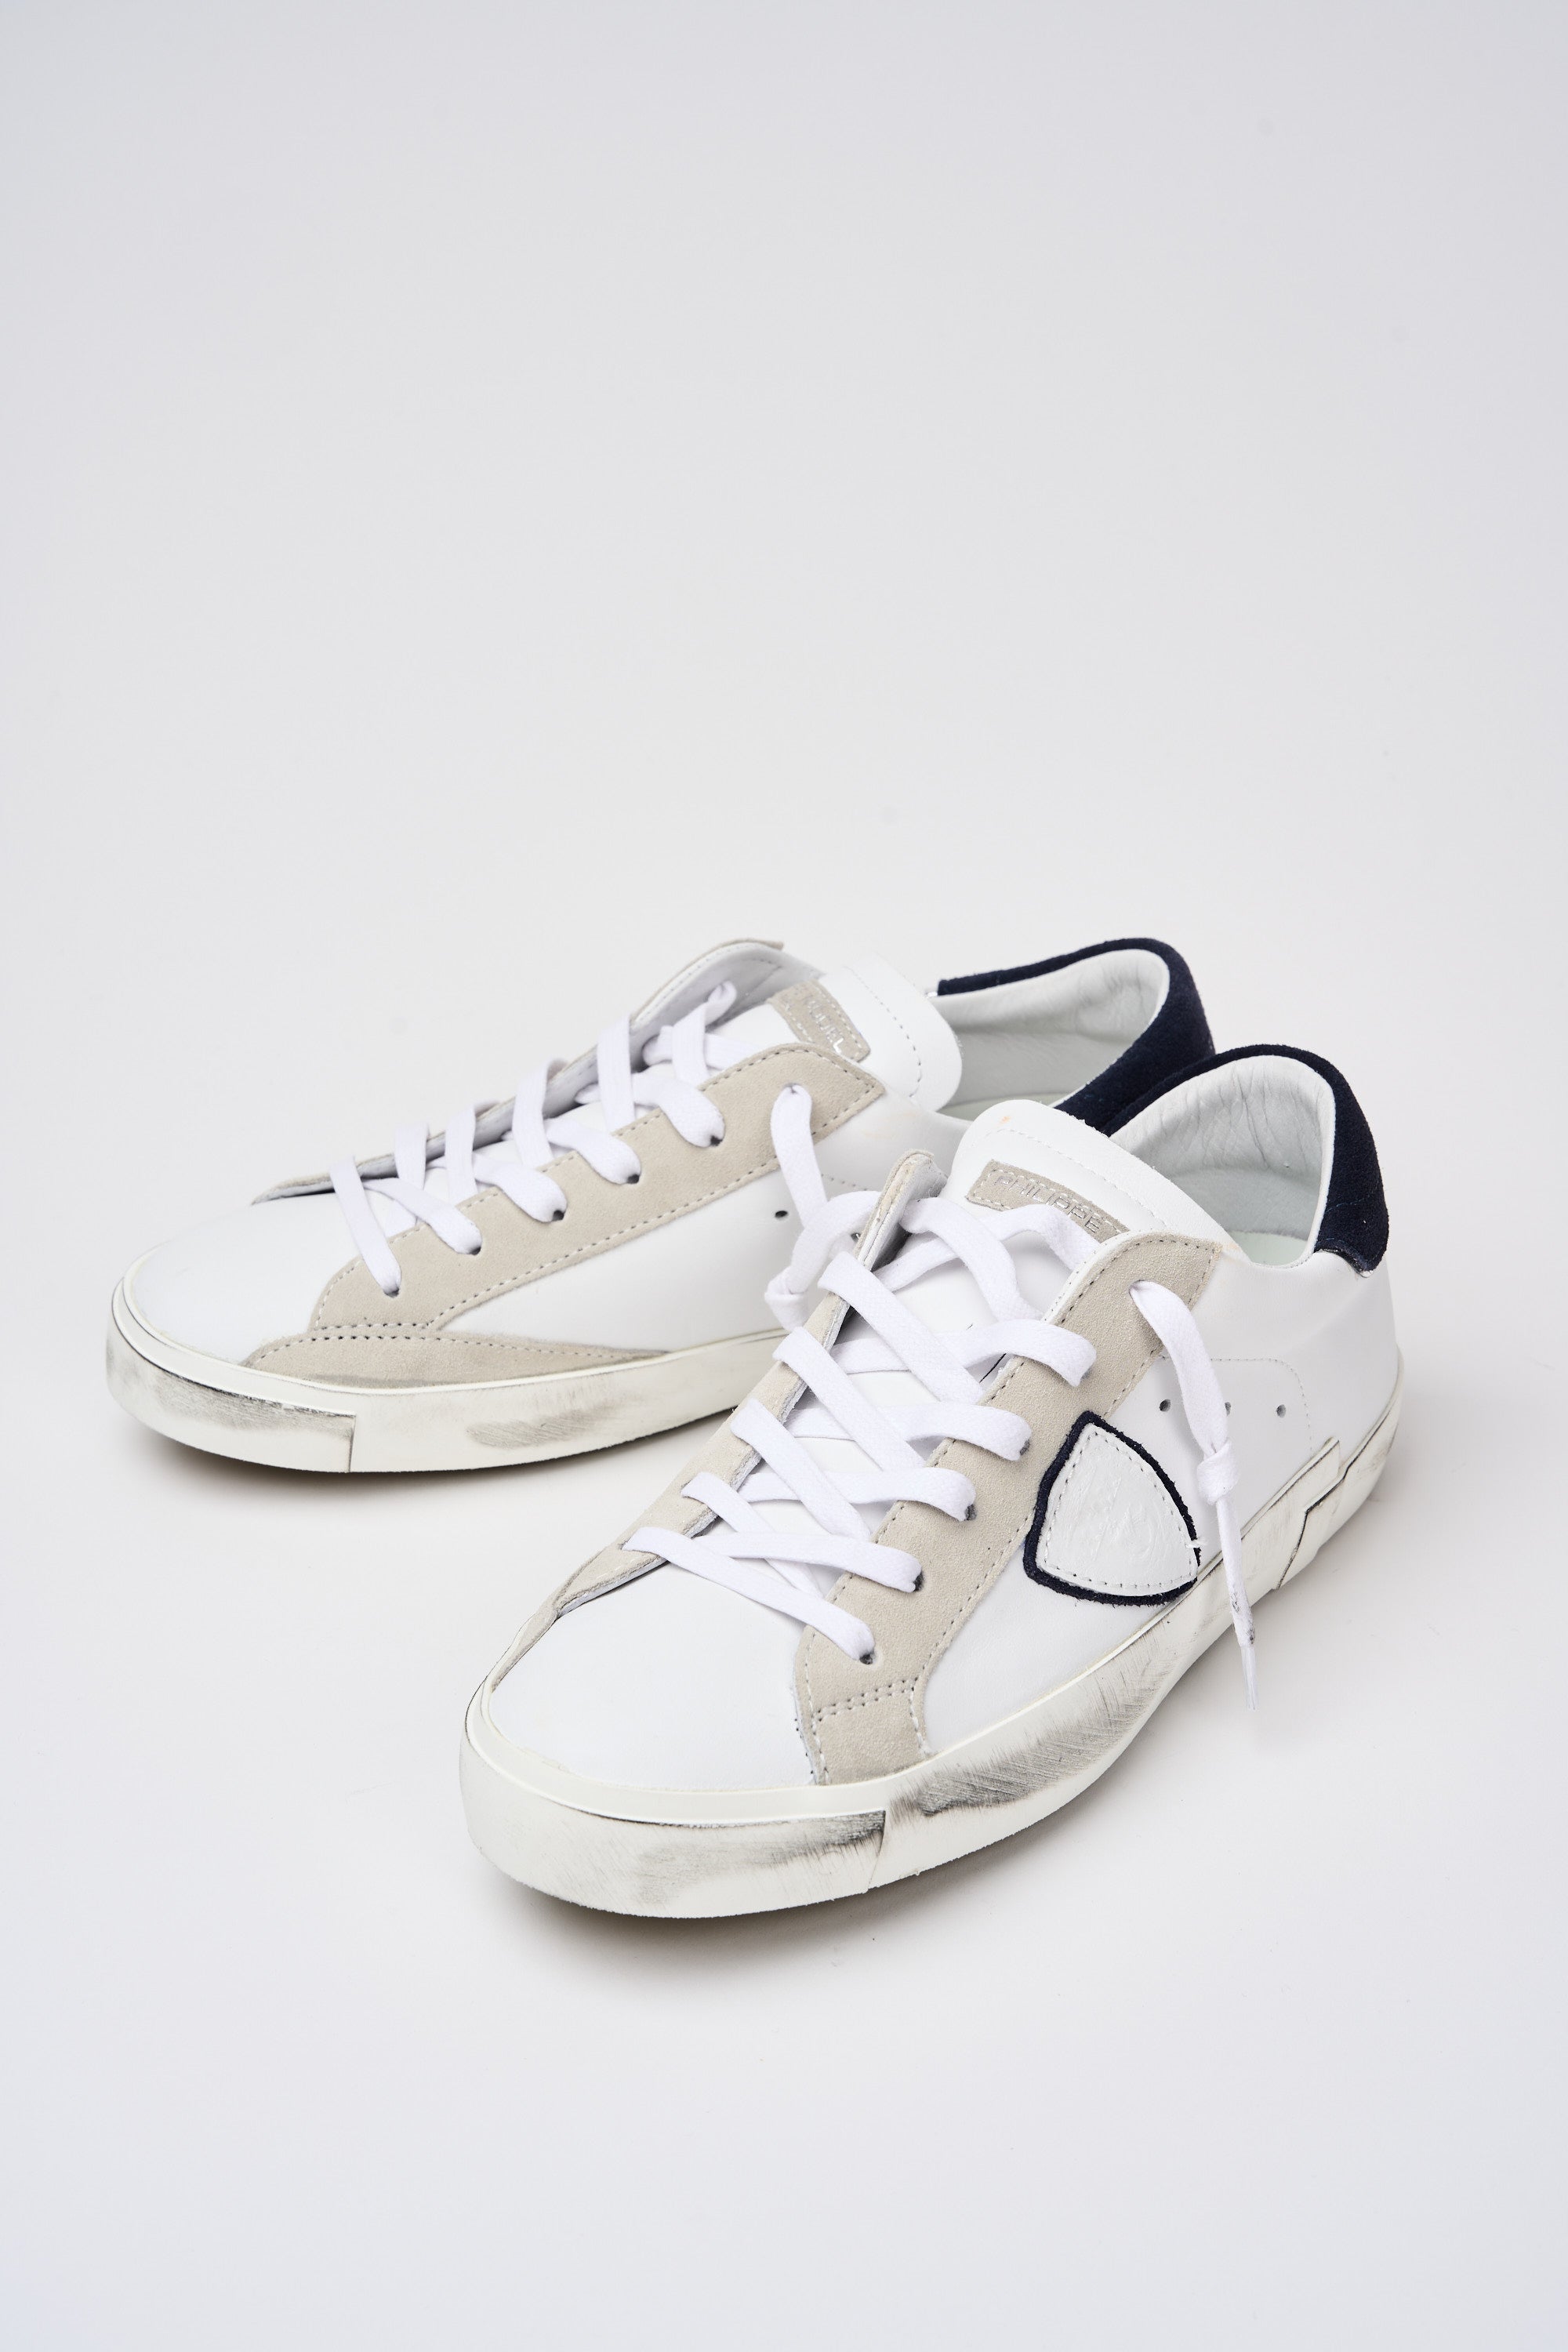 Philippe Model Sneaker PRSX Leder/Suede Weiß/Blau-7